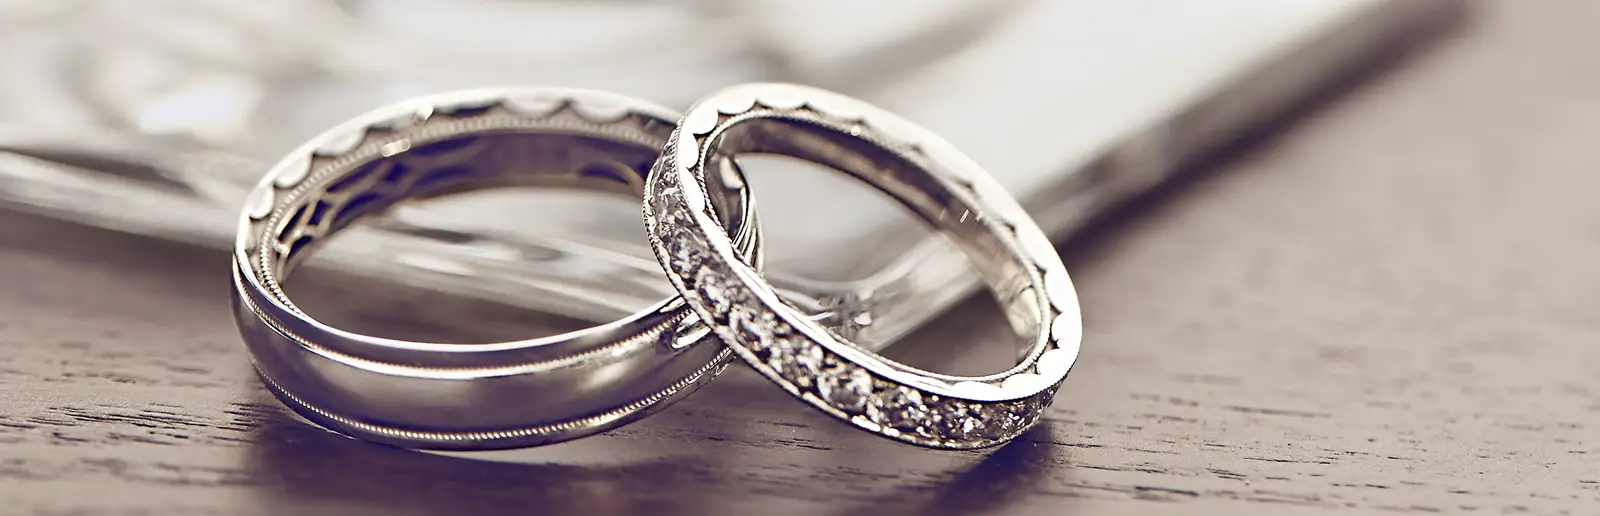 wedding-rings-14